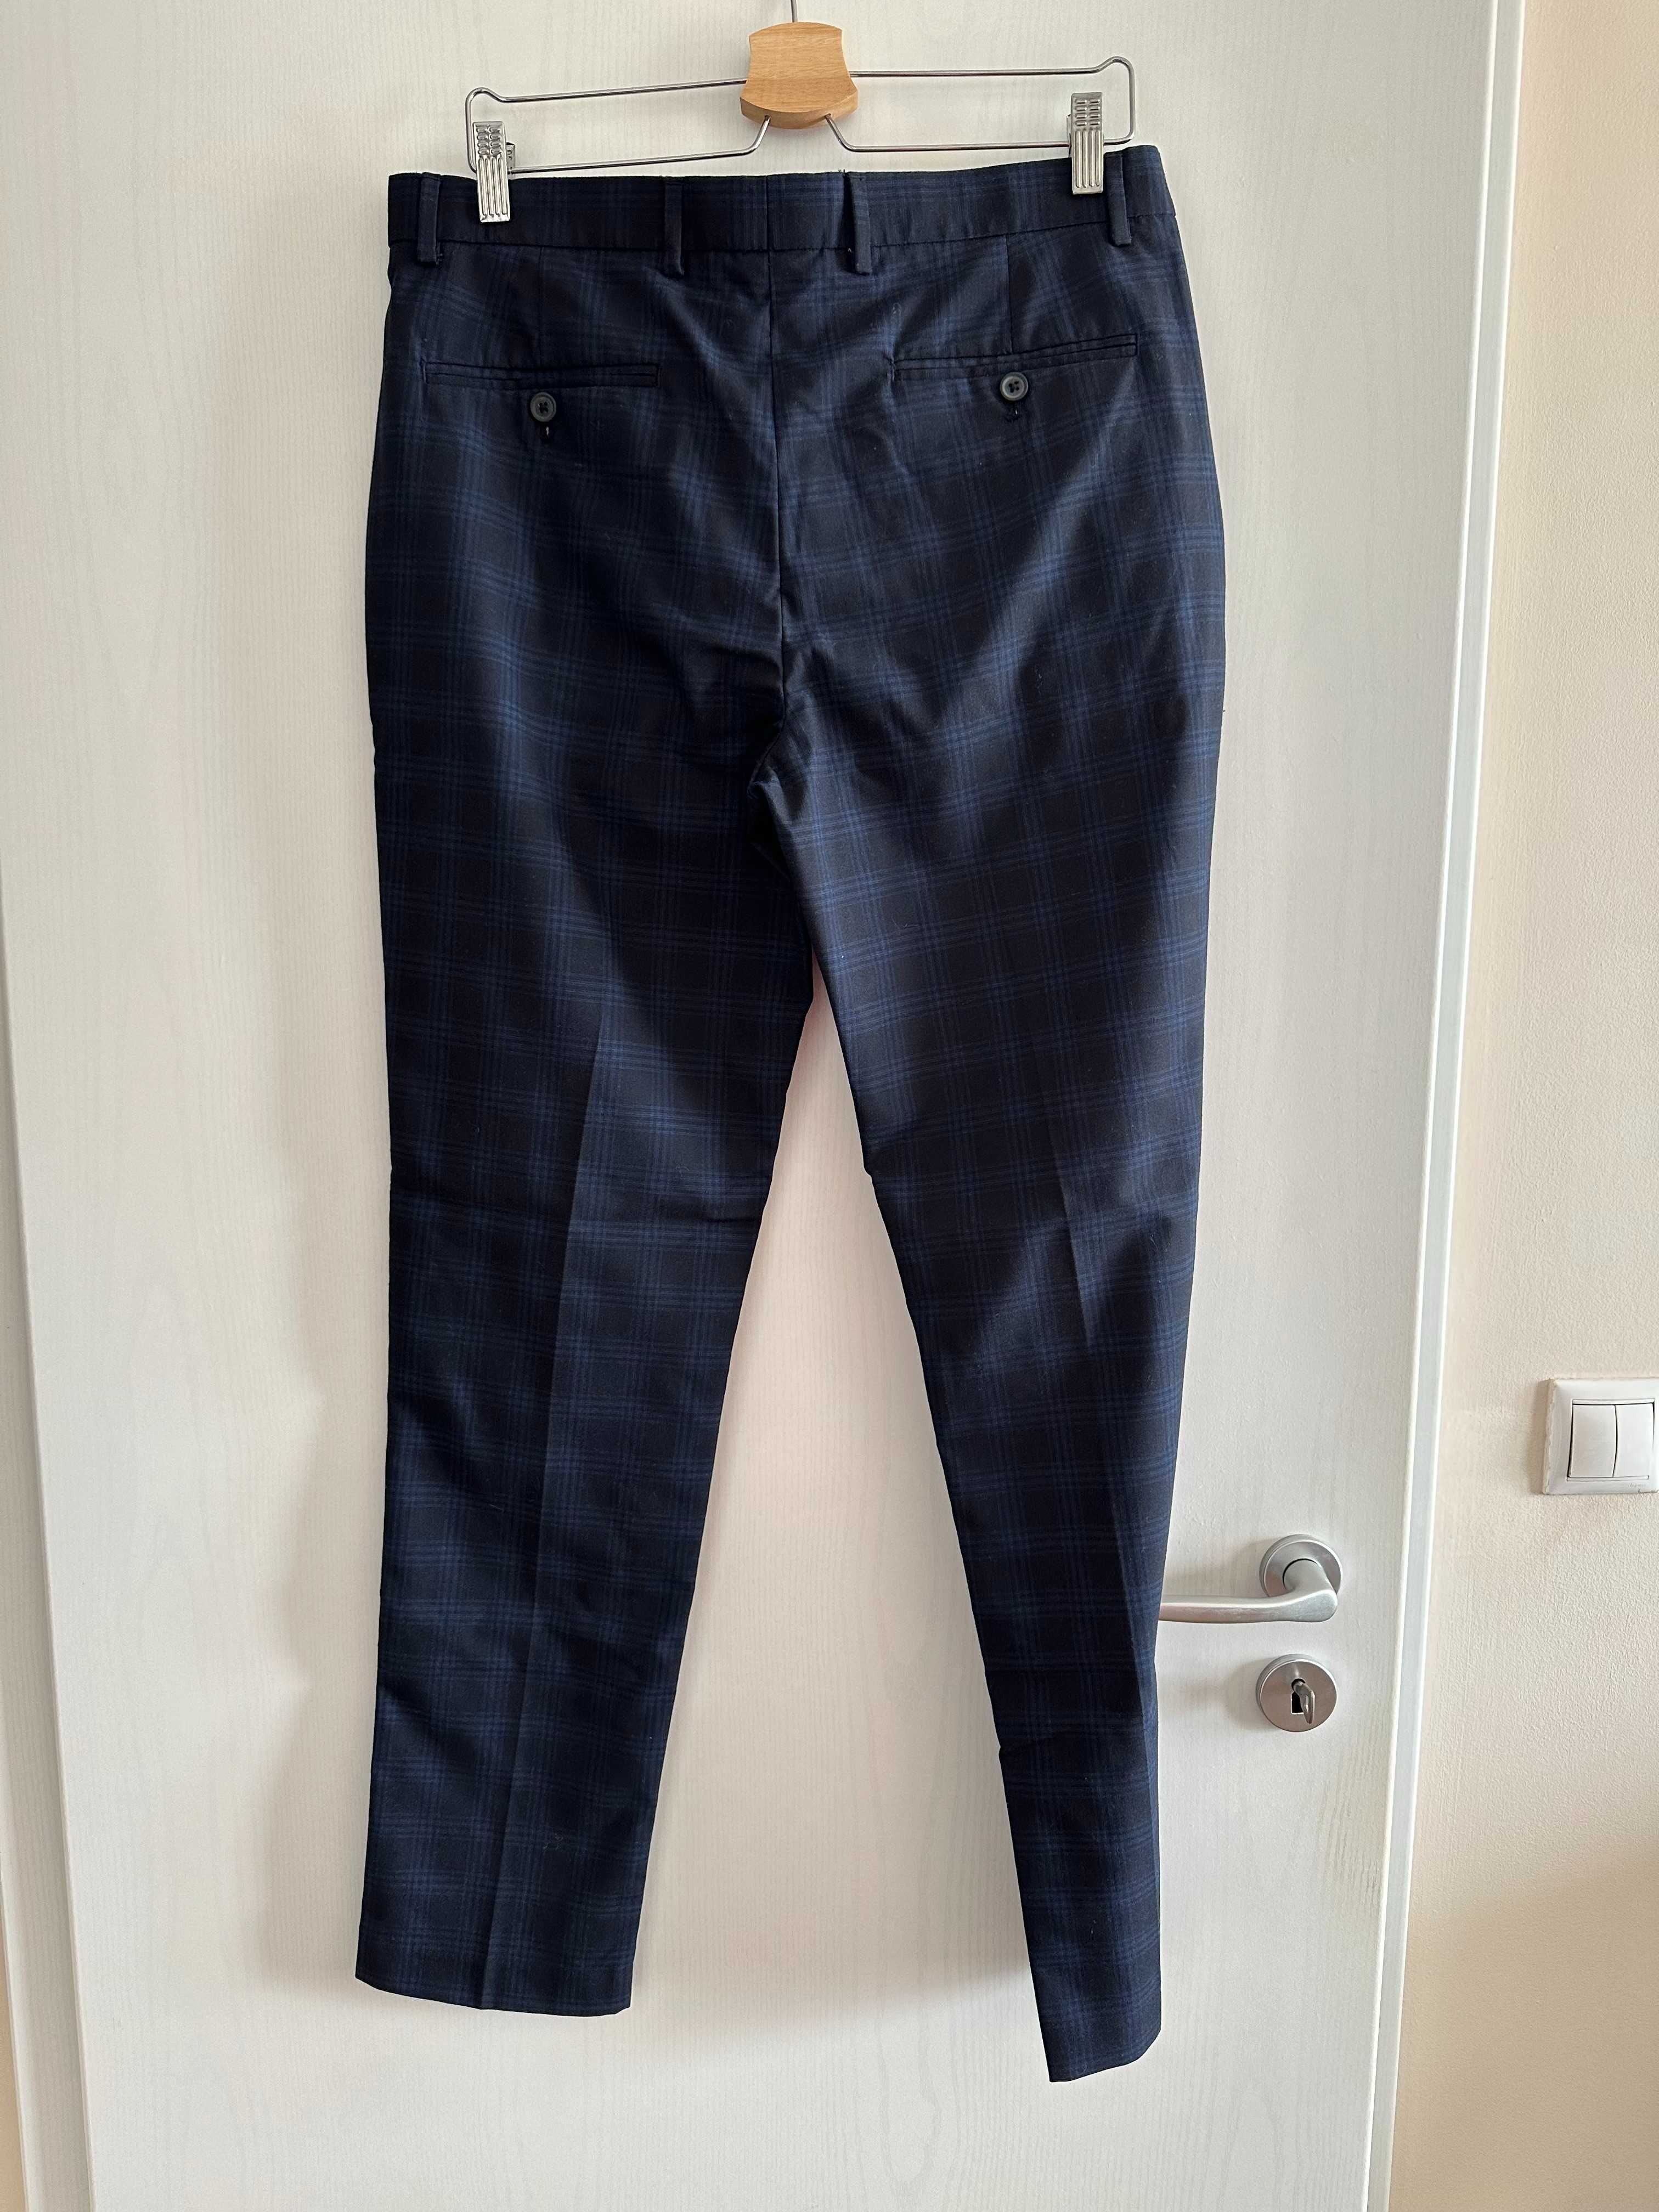 pantaloni Burton Menswear London, marimea L 34